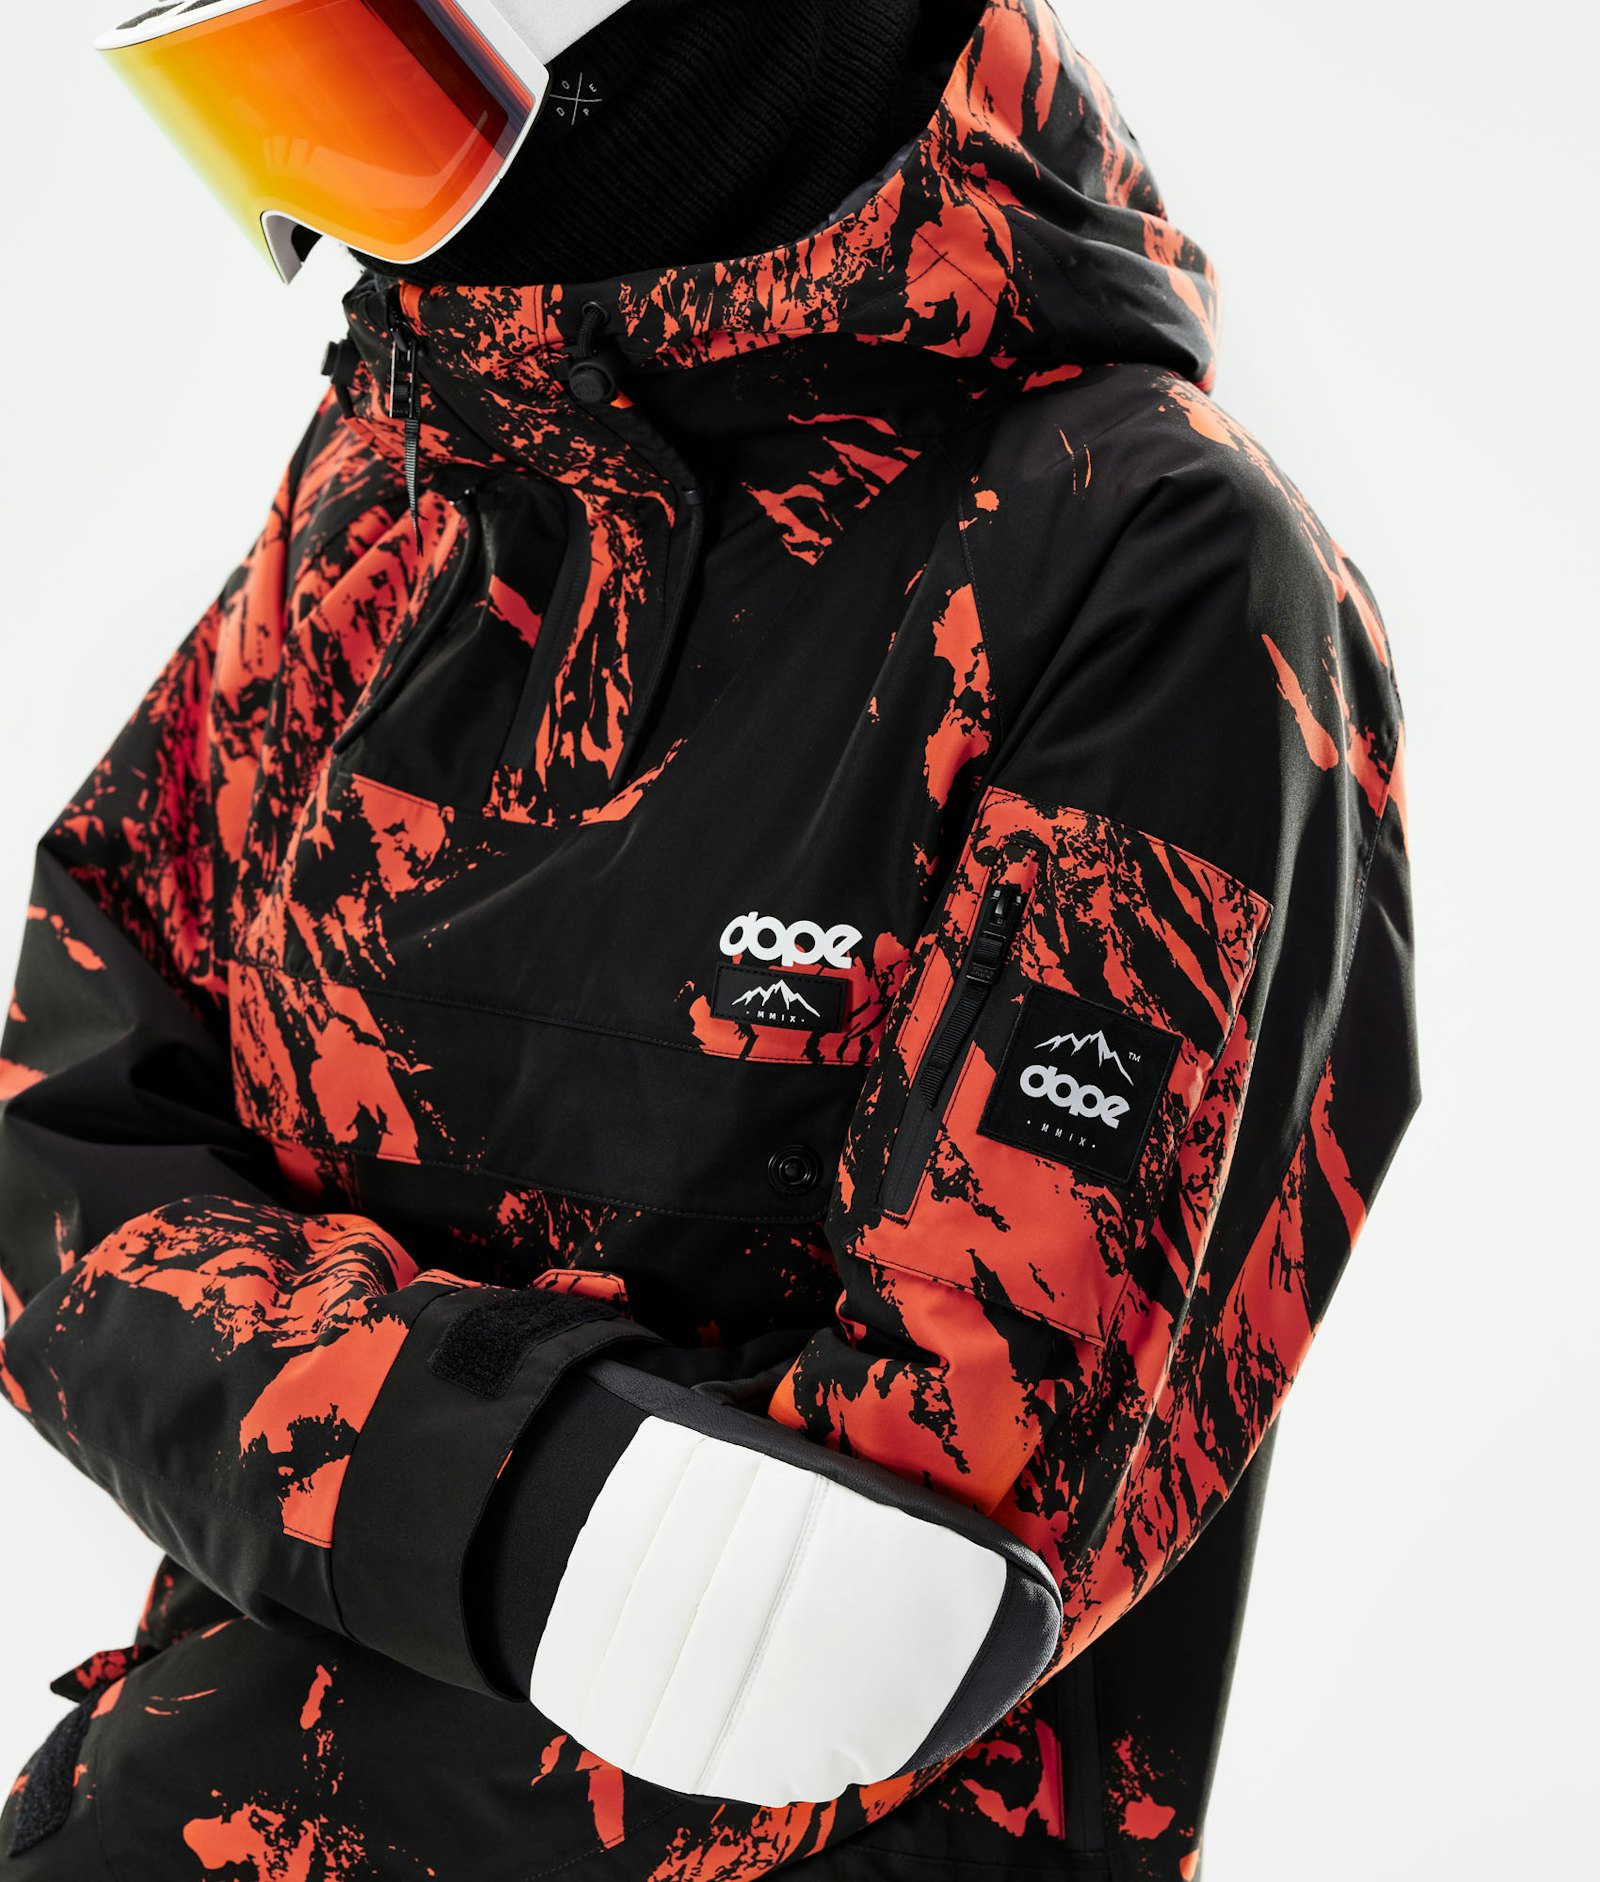 Annok 2021 Veste de Ski Homme Paint Orange